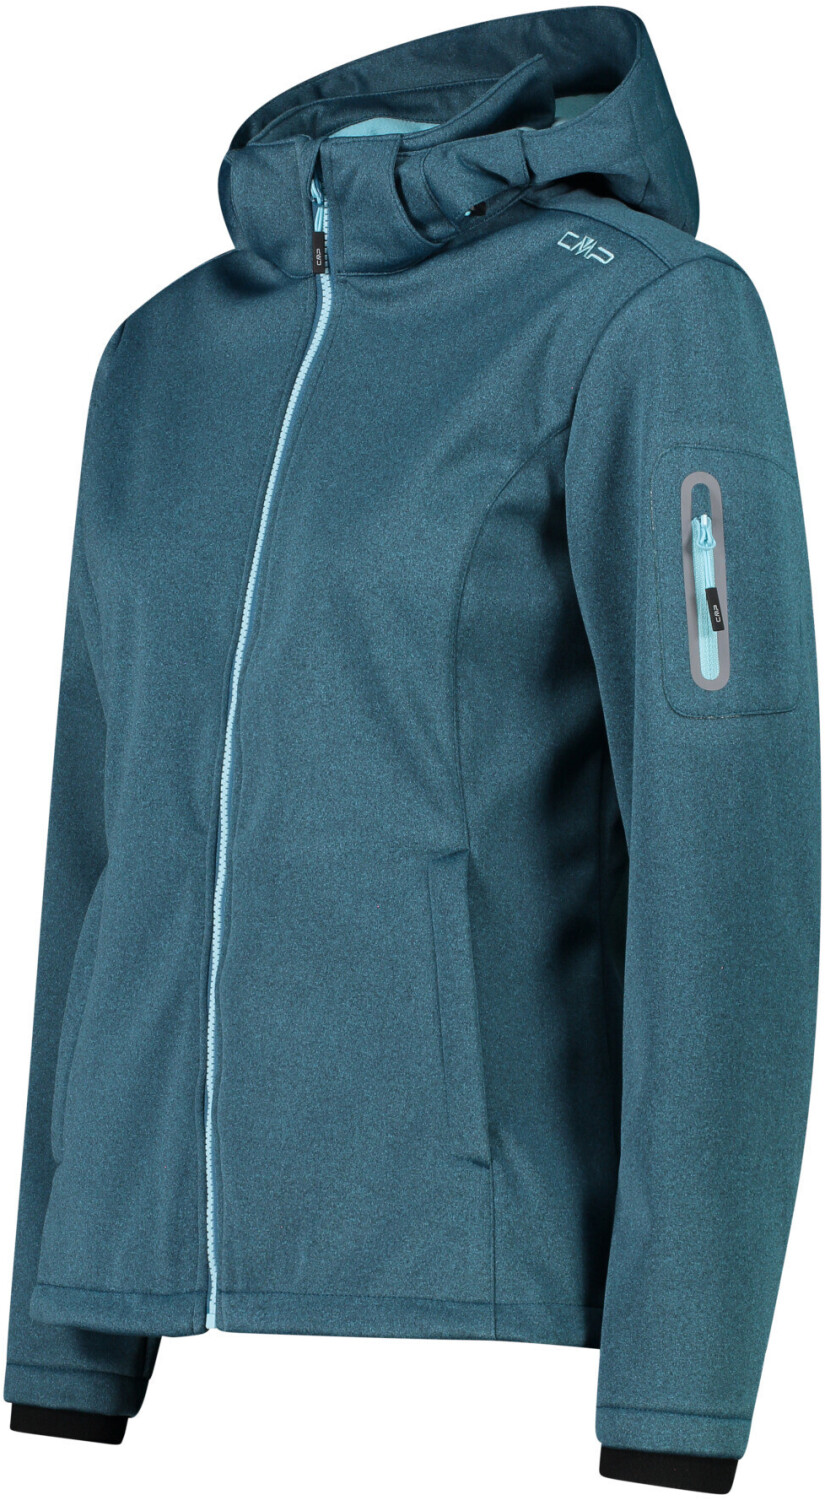 [Besonderheit, Qualitätsprodukte] CMP Woman Jacket mel.-acqua Hood Preisvergleich bei ab 48,35 lake | Zip (39A5006M) € deep